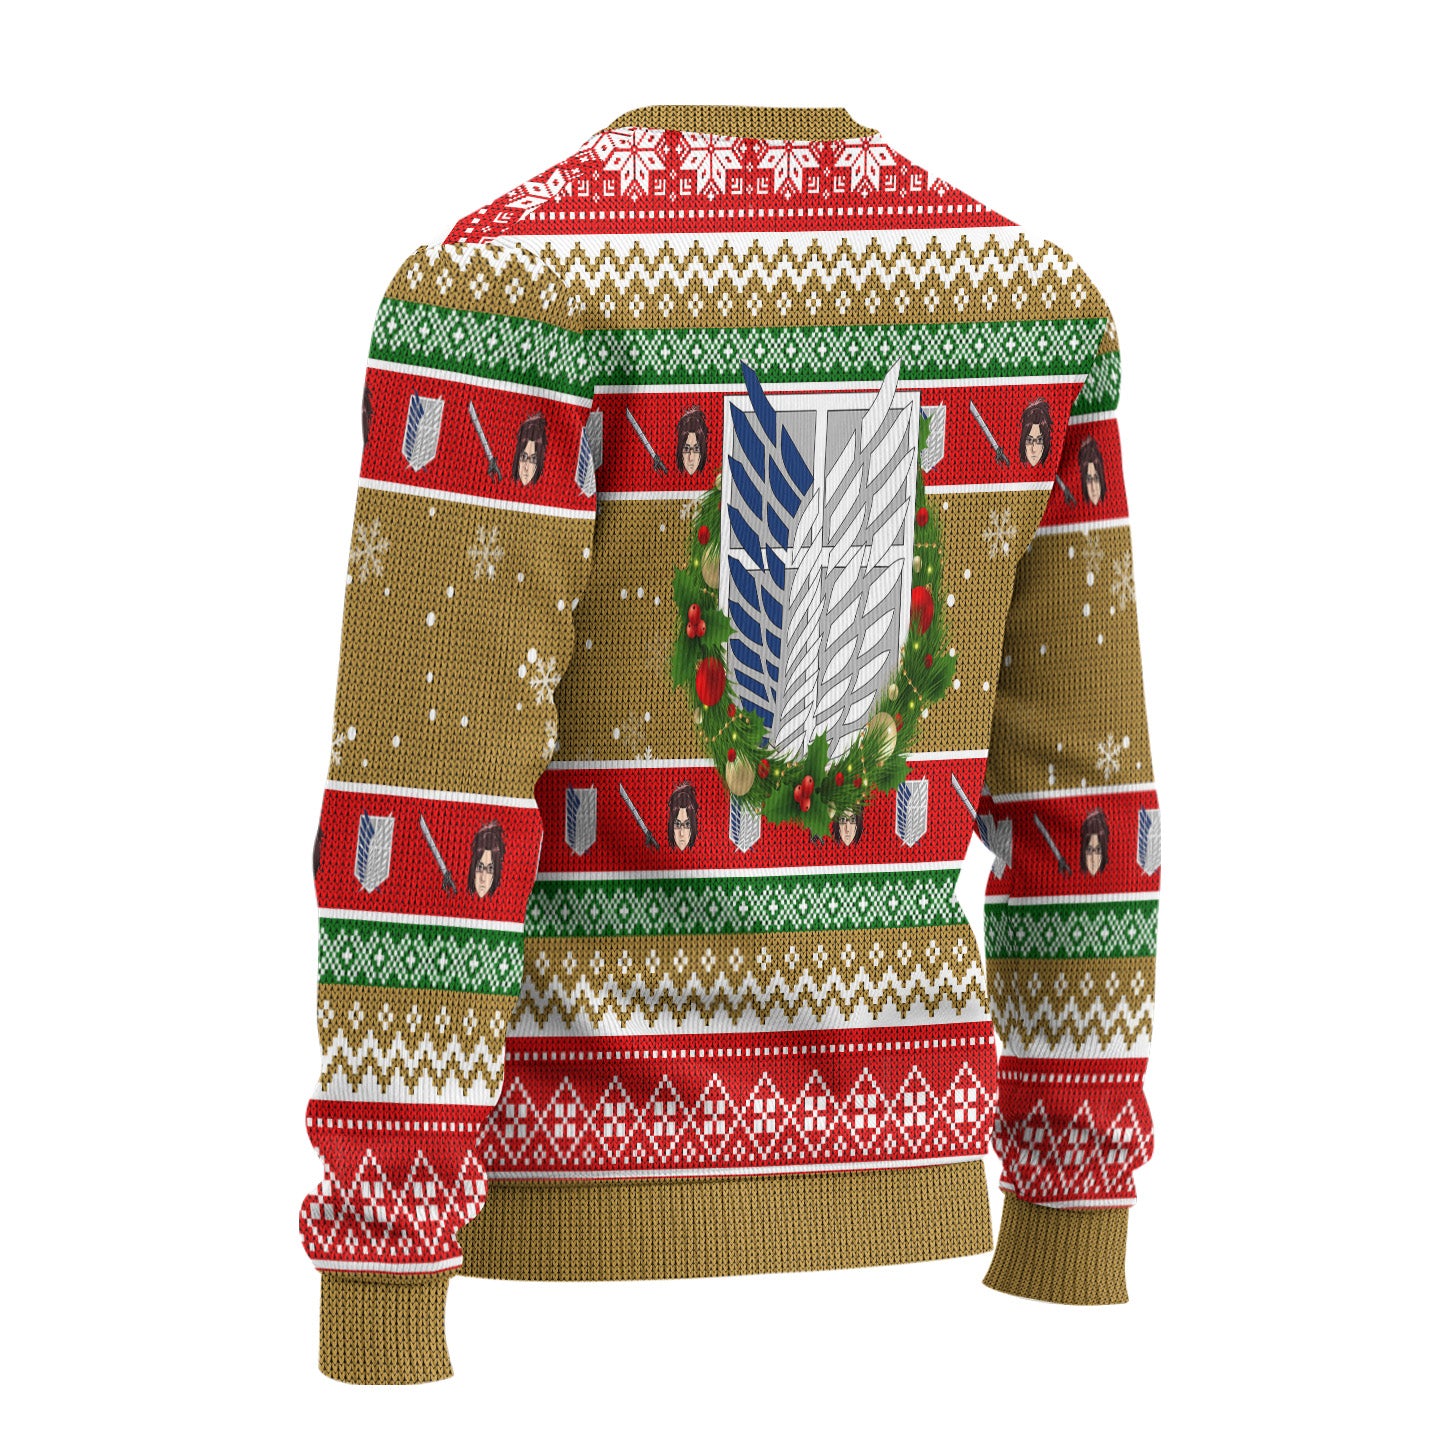 Hange Zoe Attack on Titan Anime Ugly Christmas Sweater New Design